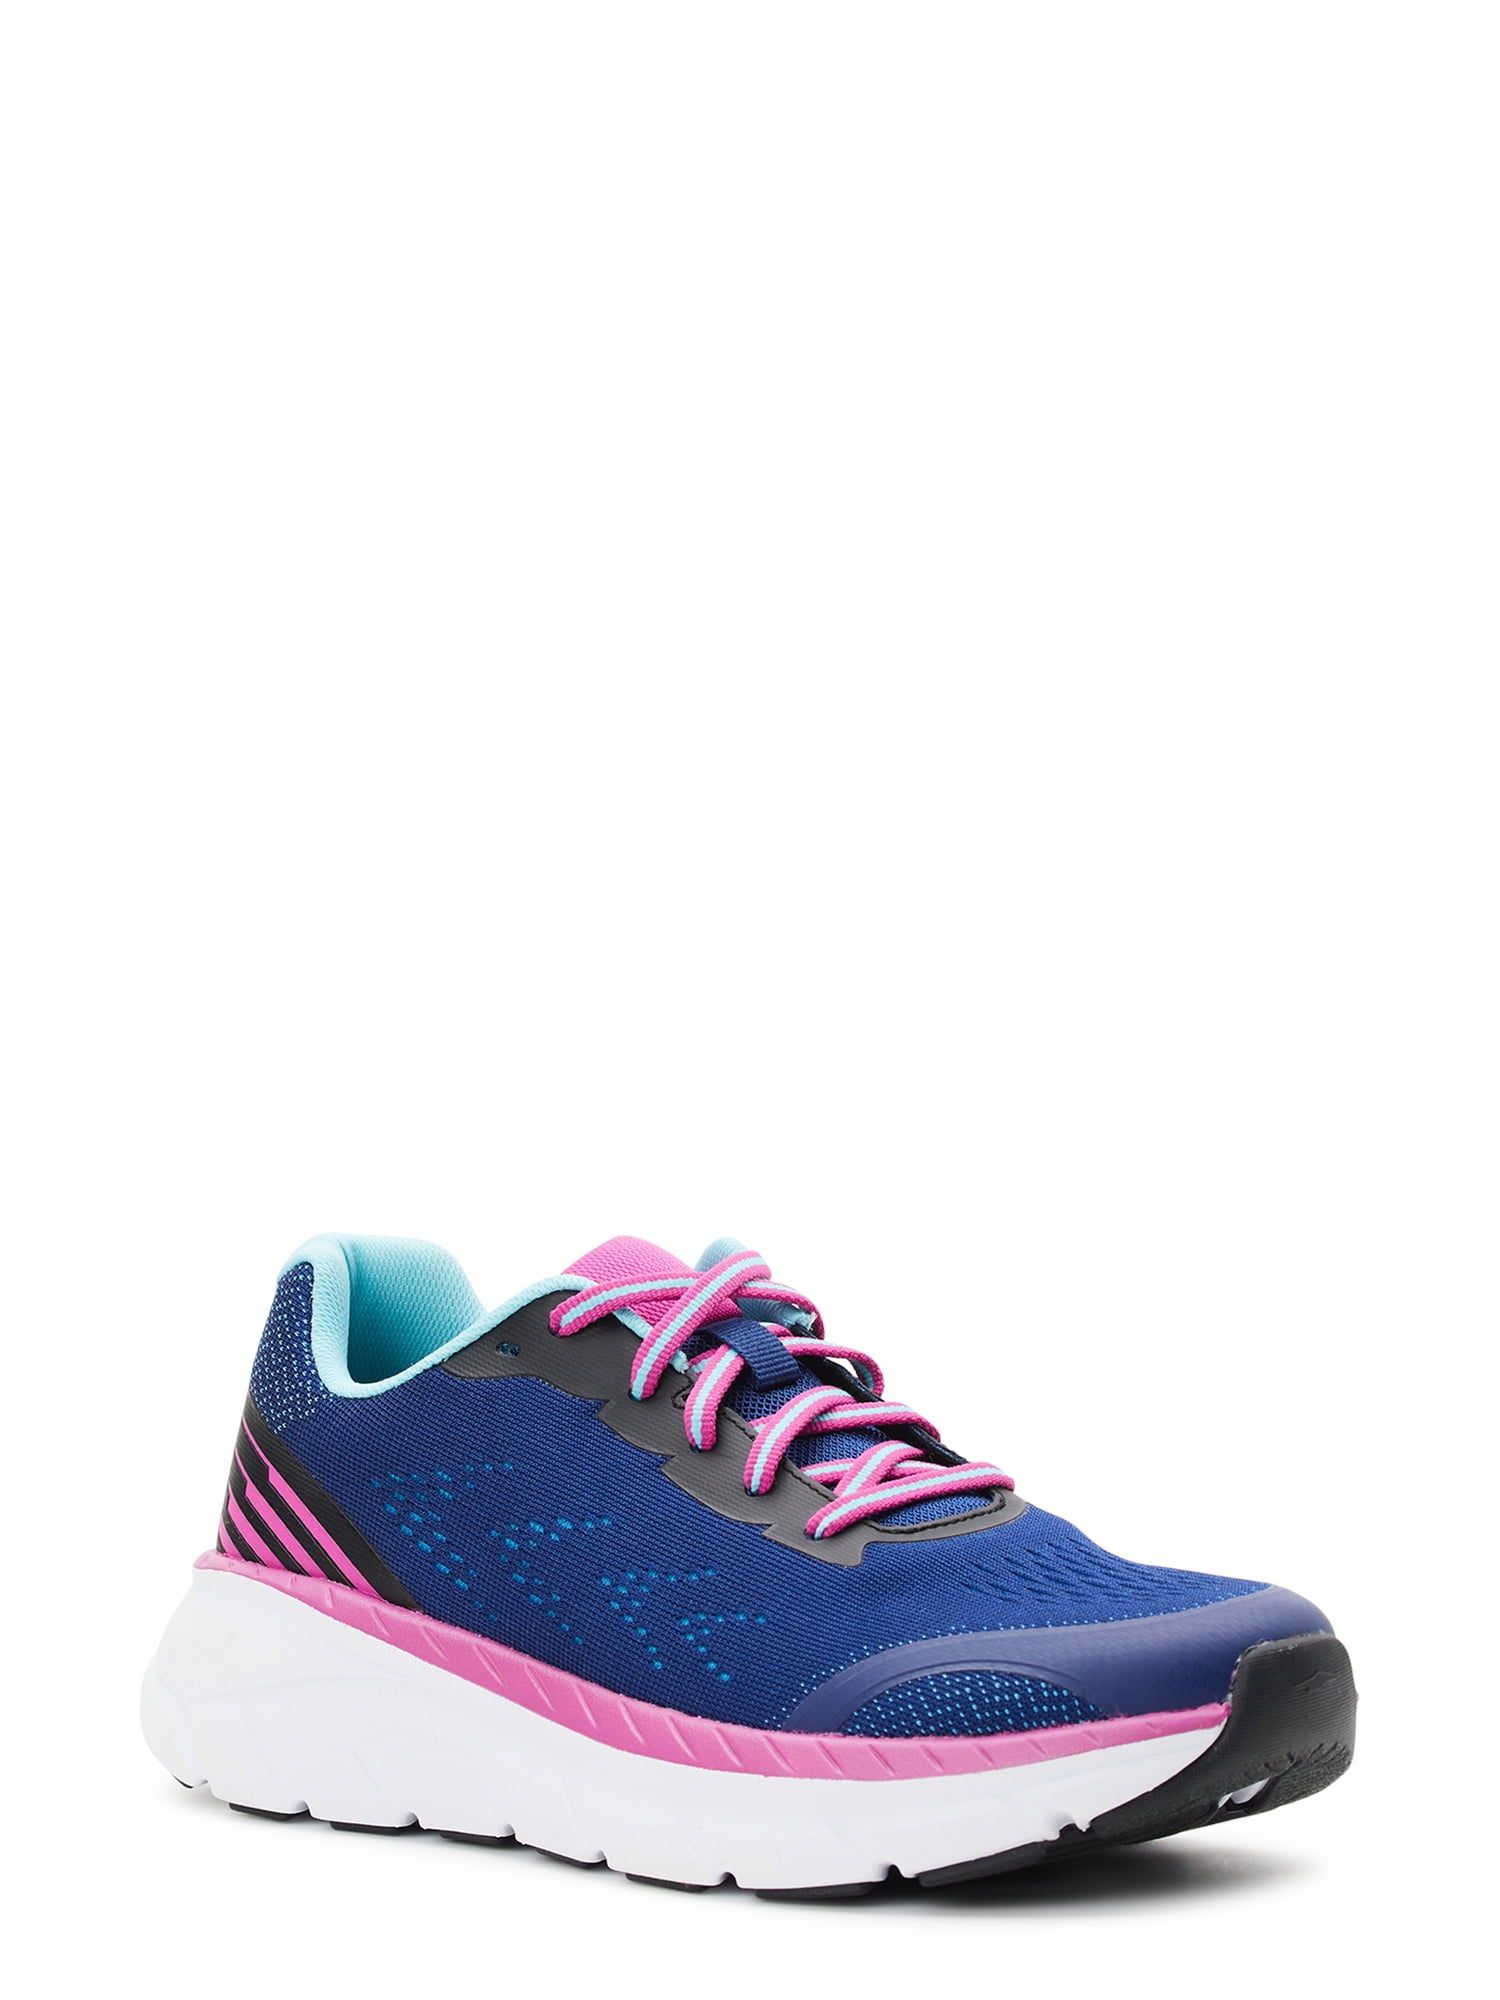 Avia Women's Slip-on Athletic Sneaker, Wide Width Available 